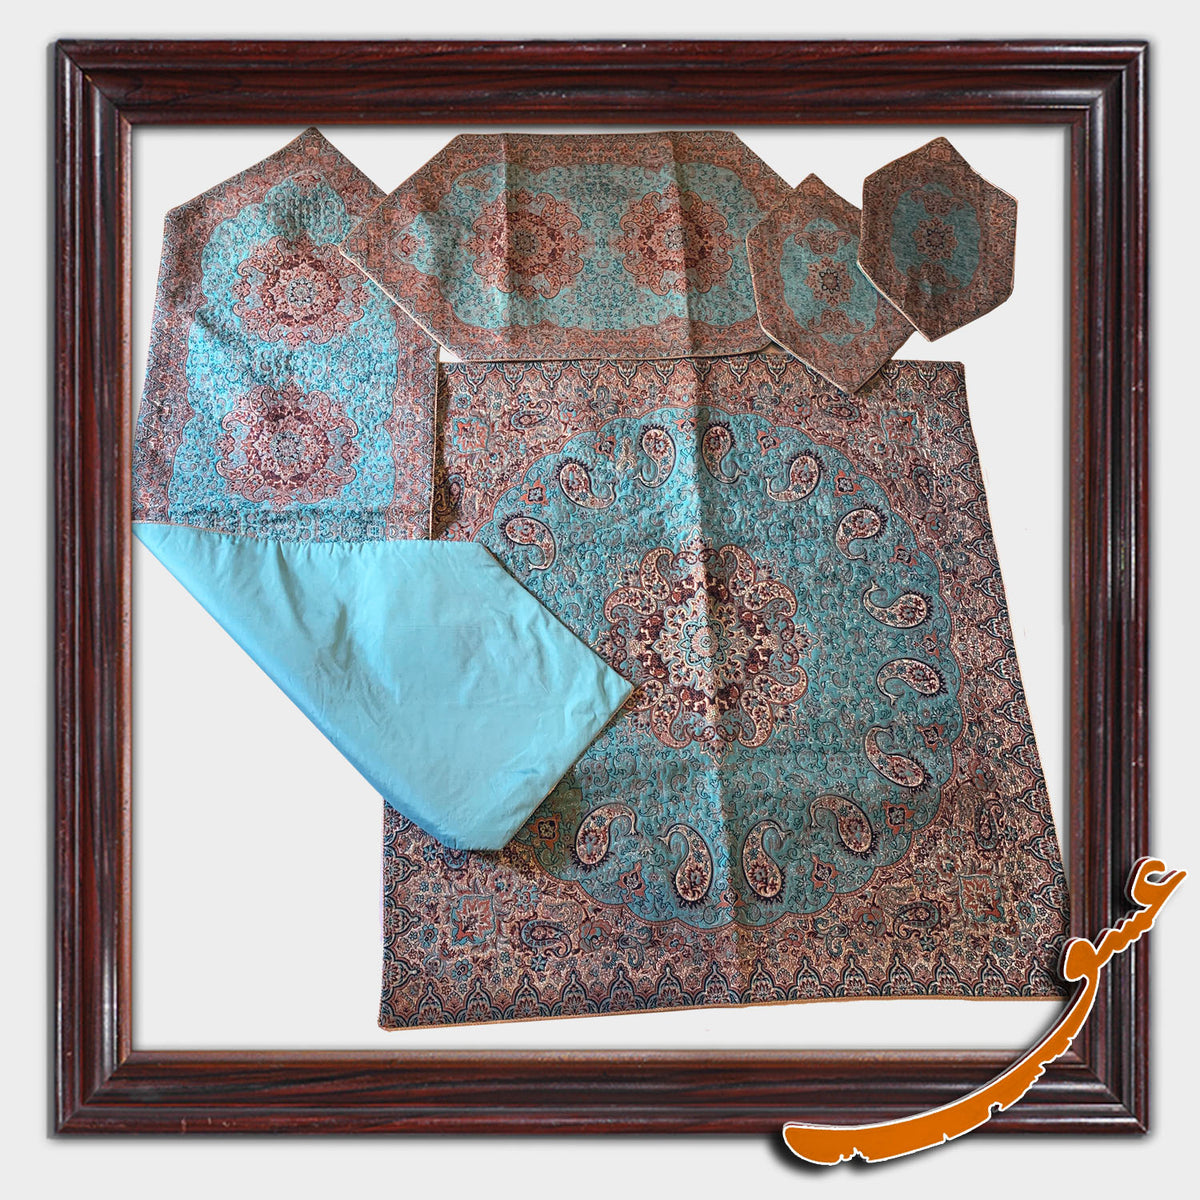 Termeh Luxury Bag, Exultation Design - Shop Iran Art